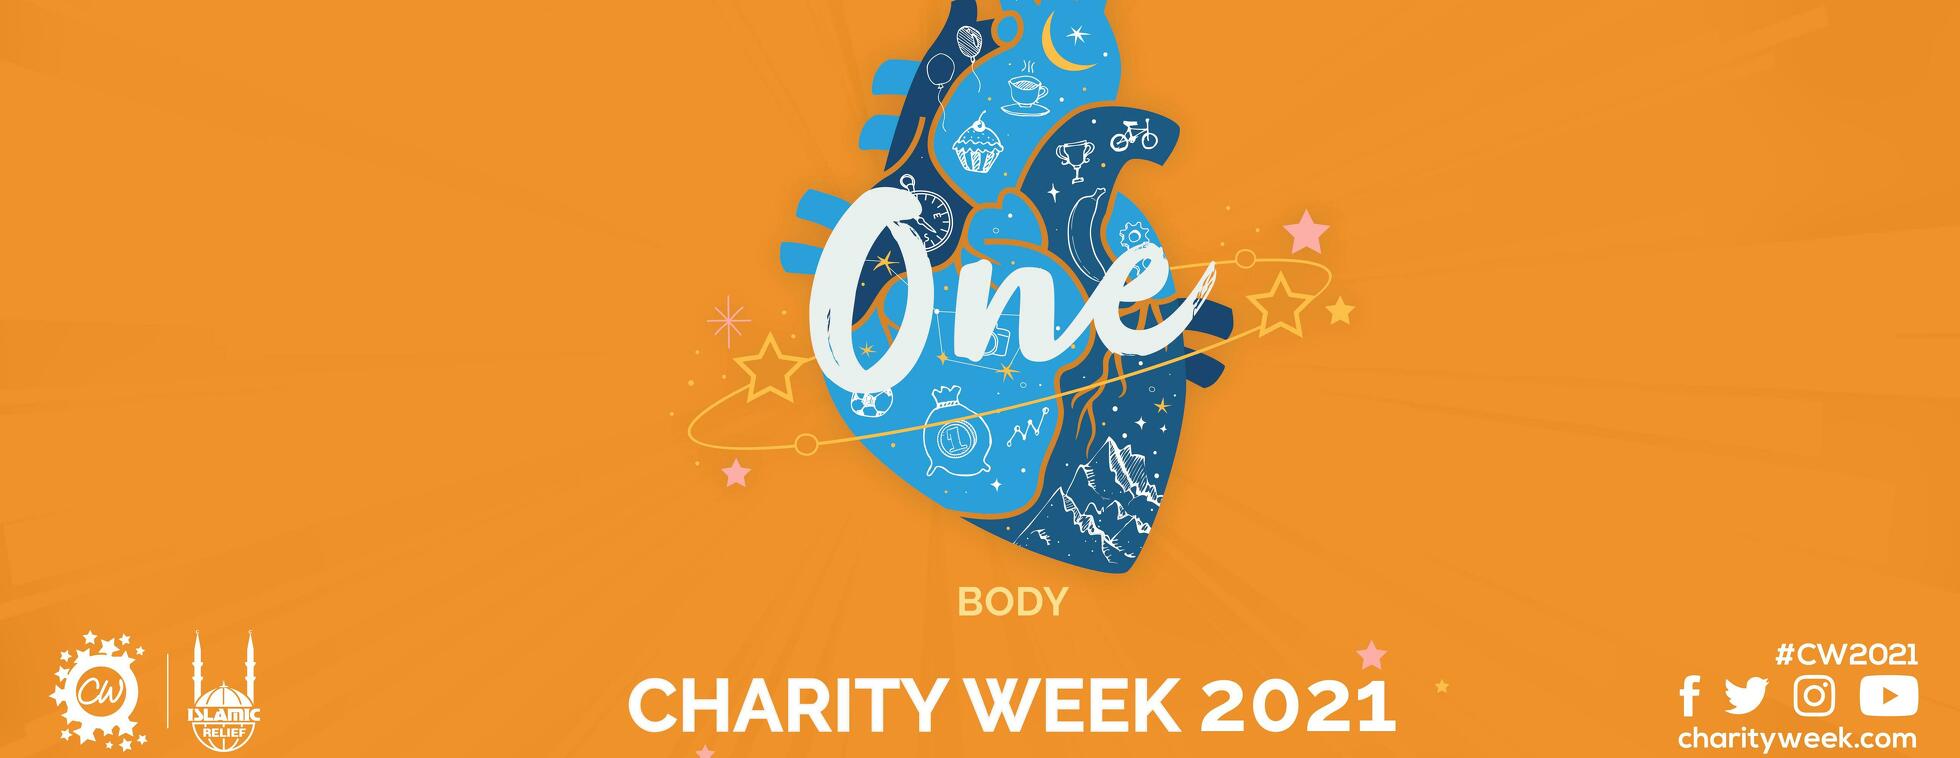 Charity Week USA 2021